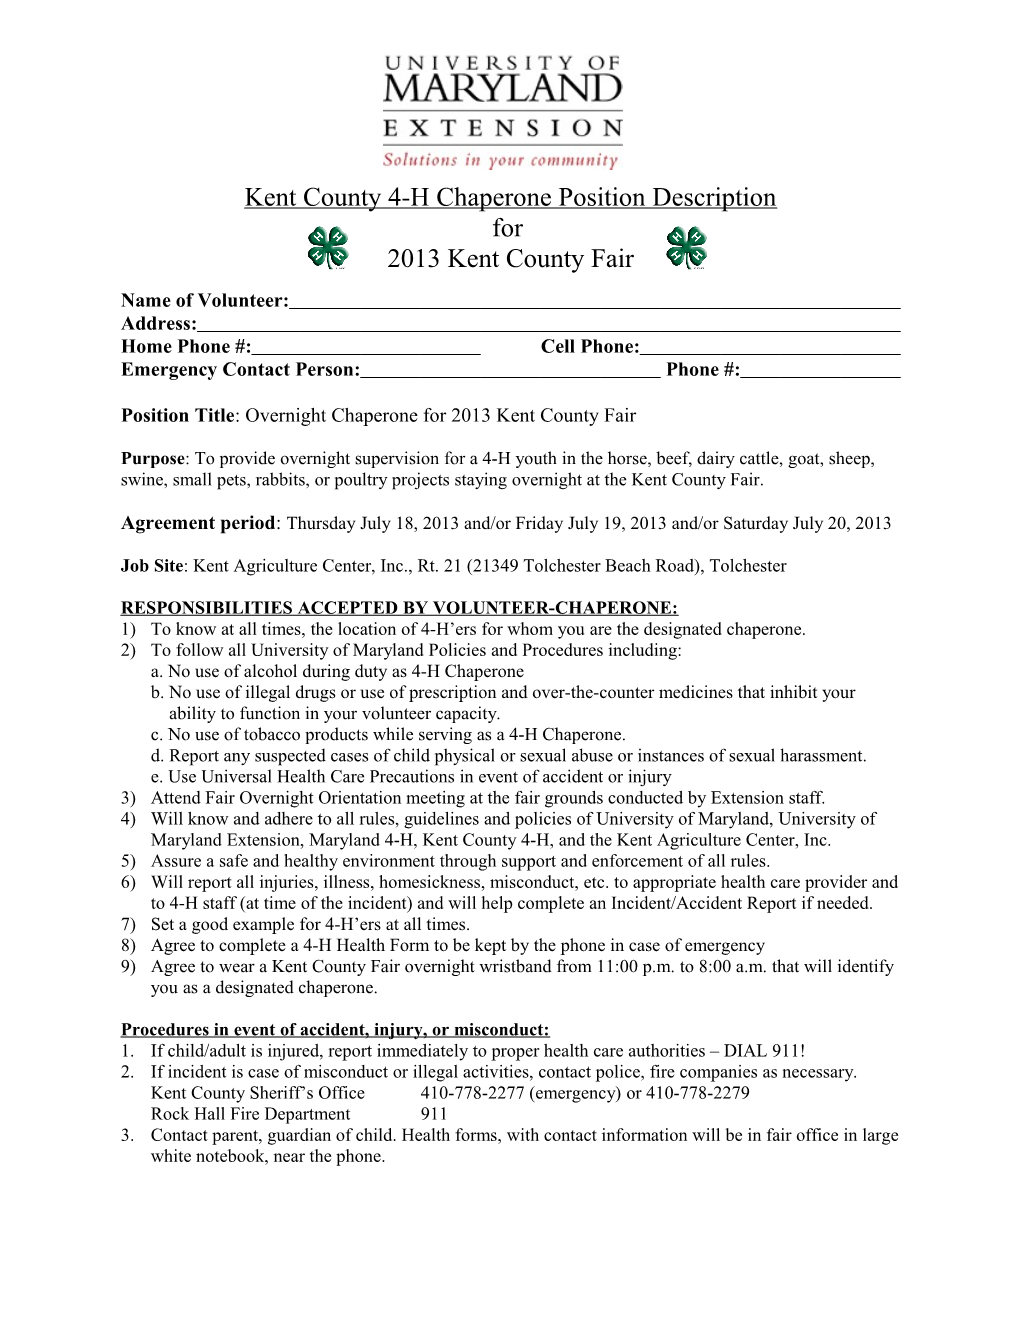 Kent County 4-H Chaperone Job Description